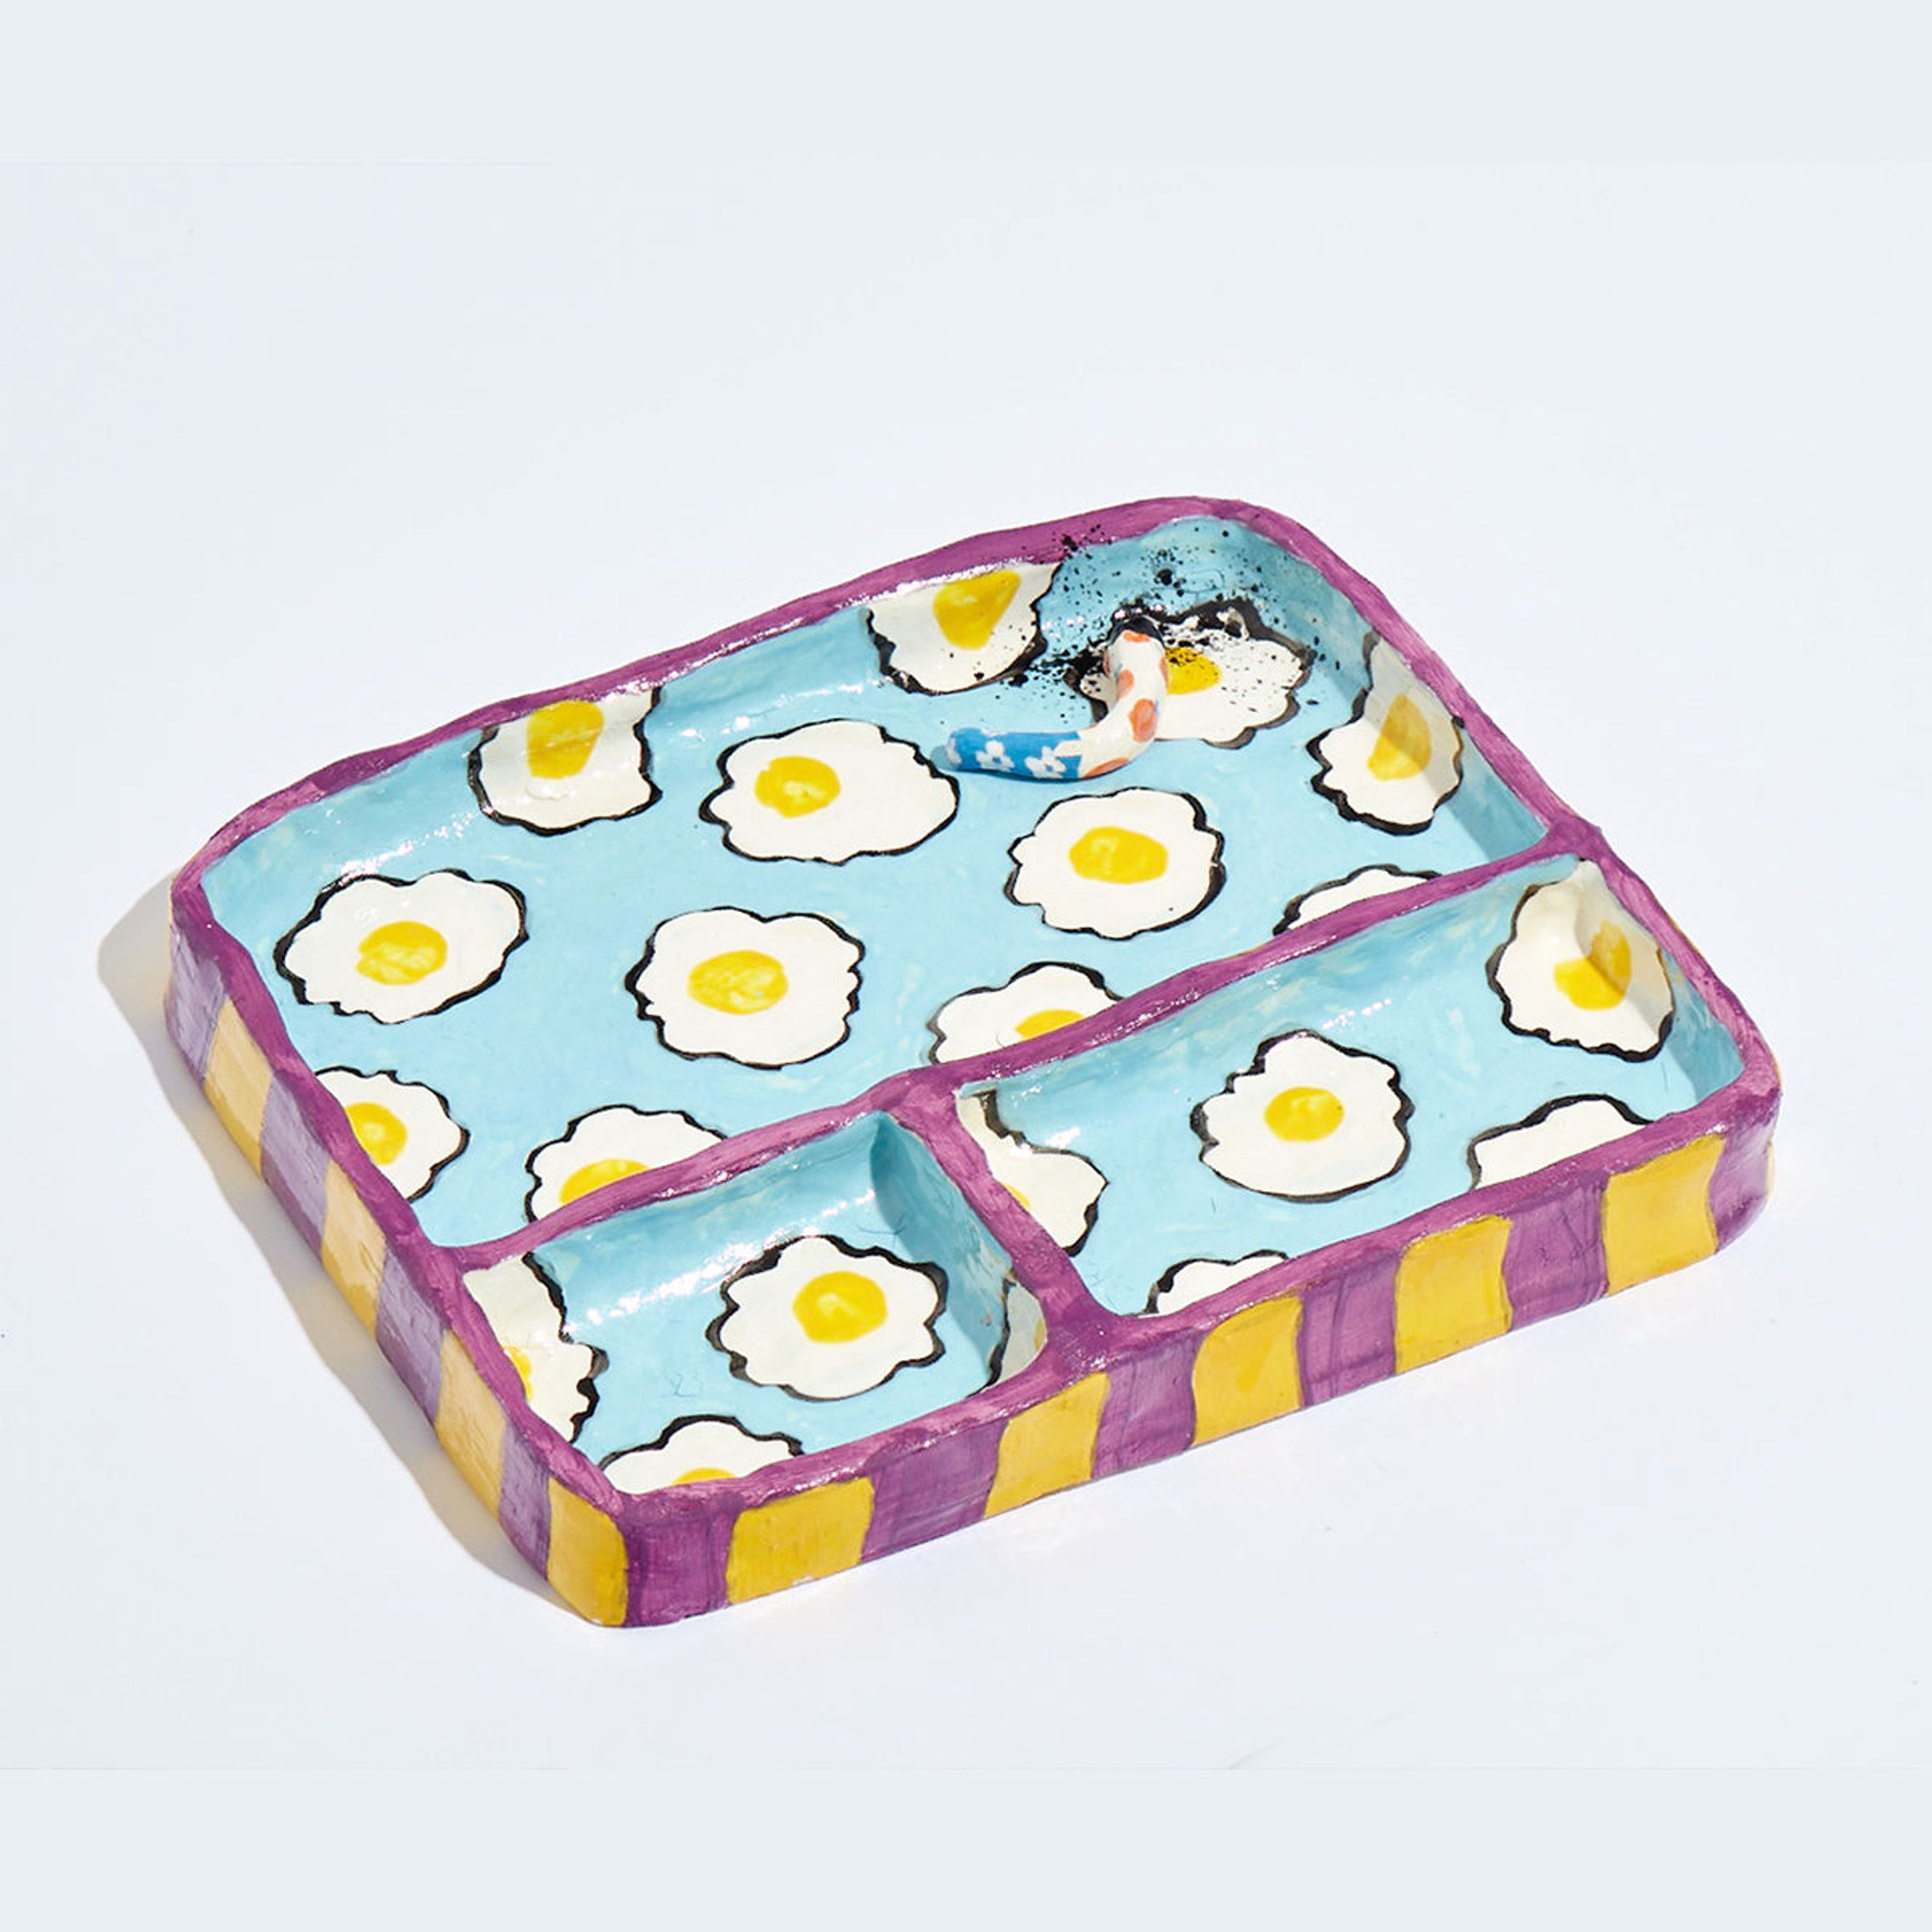 Edie Parker x Jake Clark Ceramic Rolling Tray in Fried Eggs